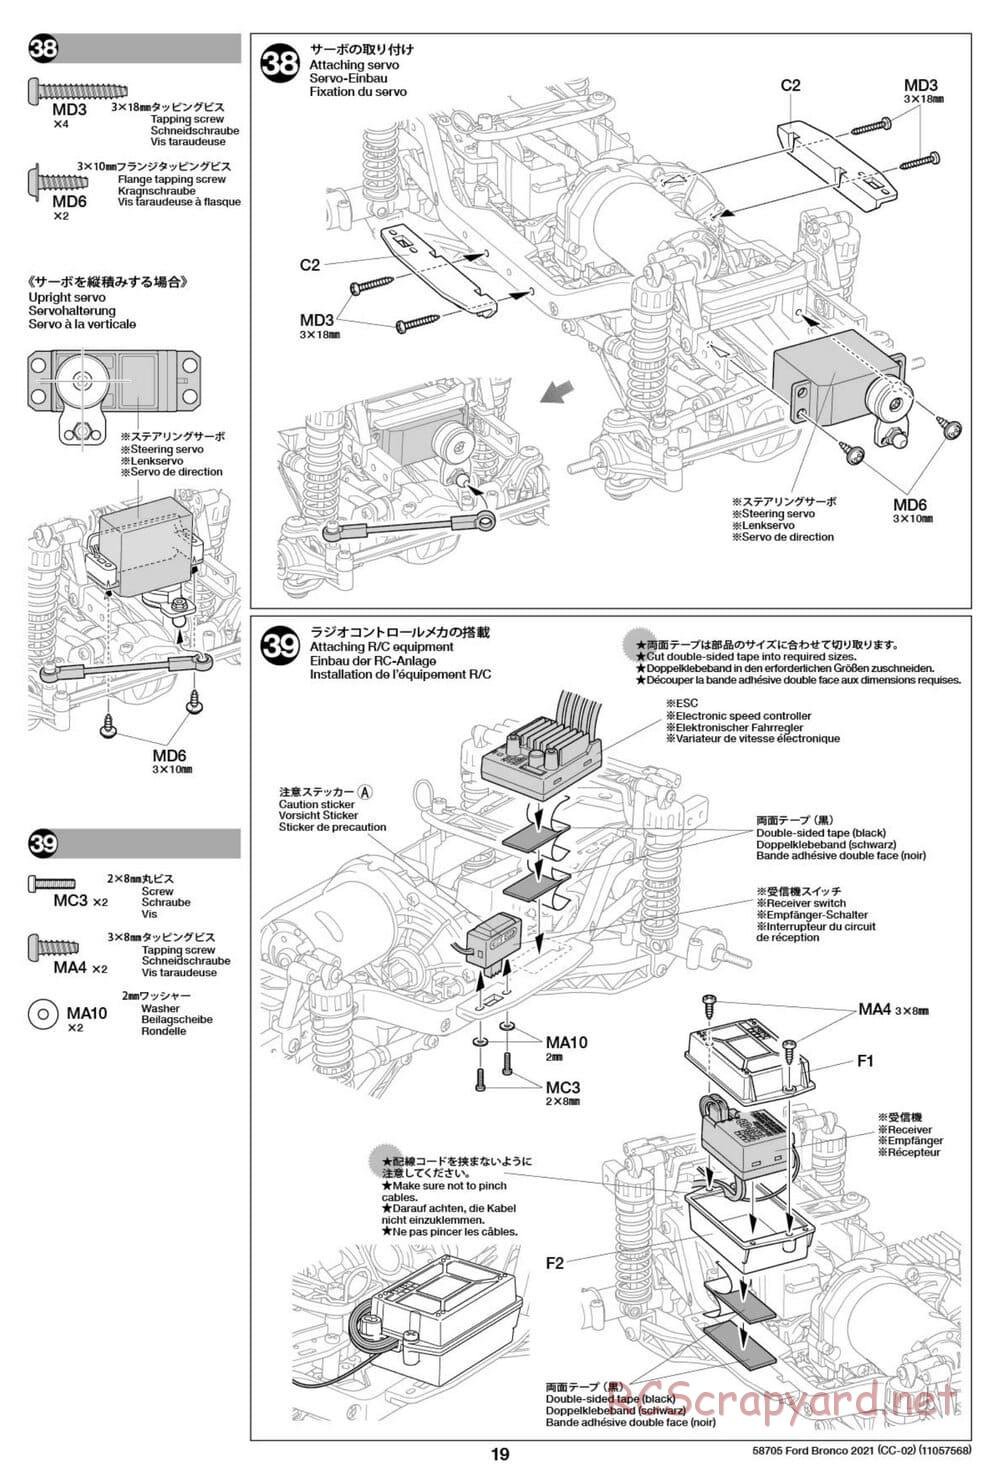 Tamiya - Ford Bronco 2021 - CC-02 Chassis - Manual - Page 19